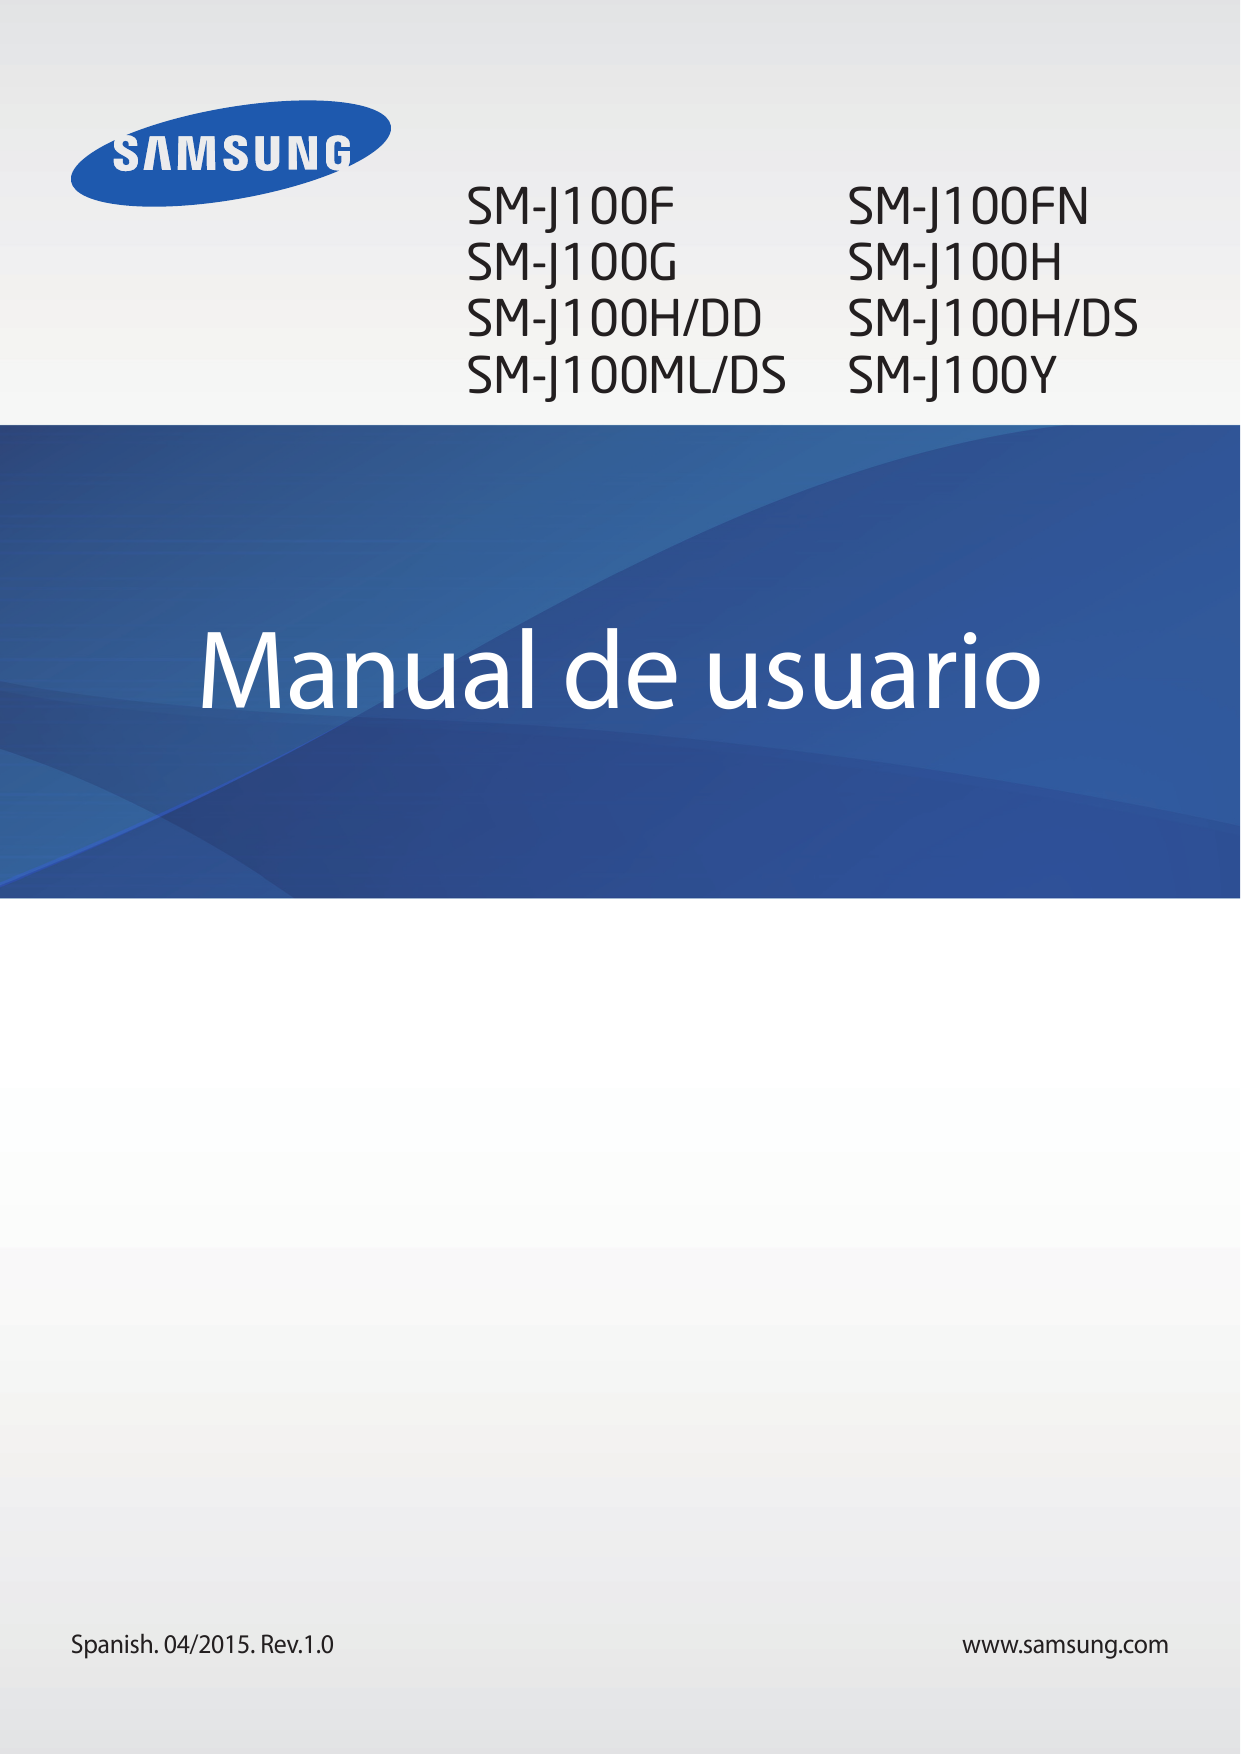 SM-J100FSM-J100GSM-J100H/DDSM-J100ML/DSSM-J100FNSM-J100HSM-J100H/DSSM-J100YManual de usuarioSpanish. 04/2015. Rev.1.0www.samsung